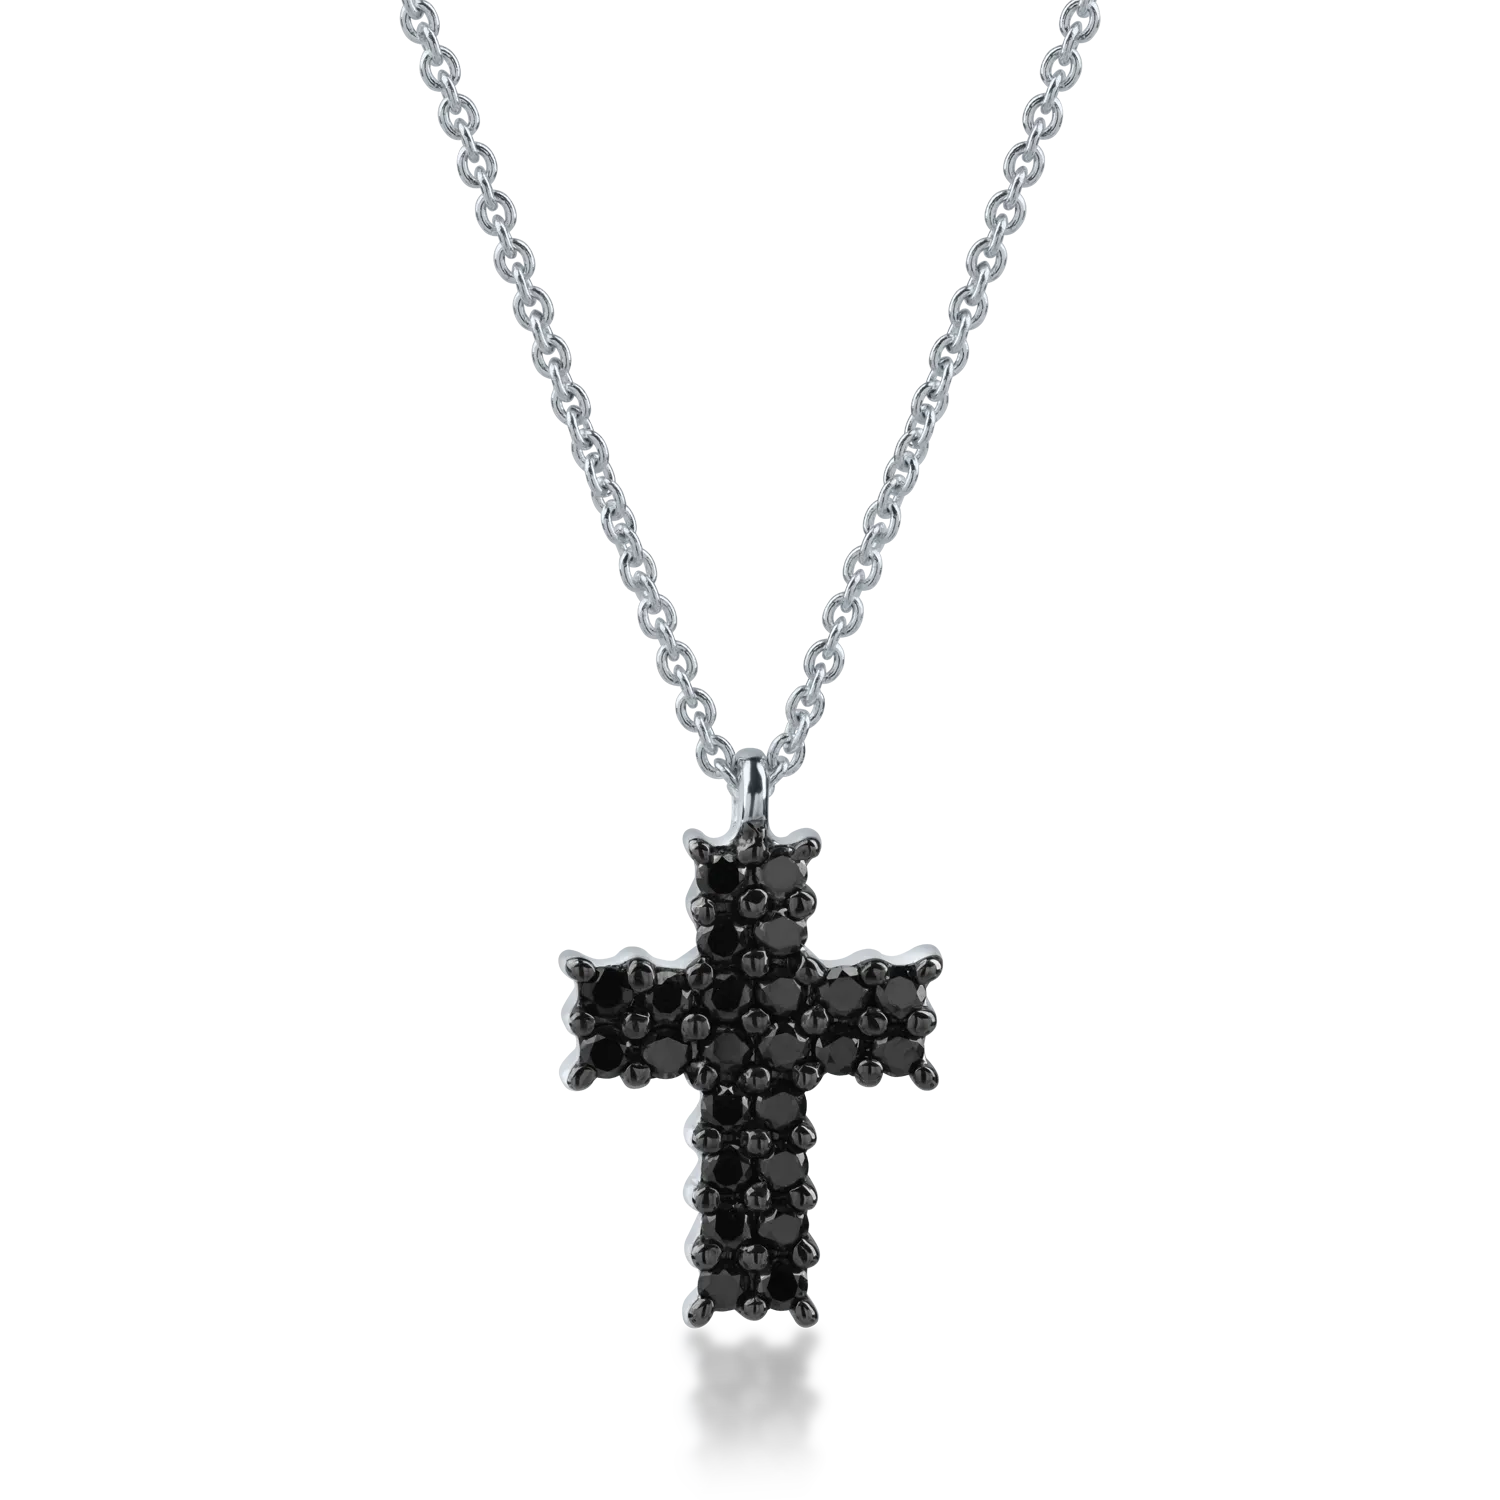 White gold cross pendant necklace with 0.38ct black diamonds